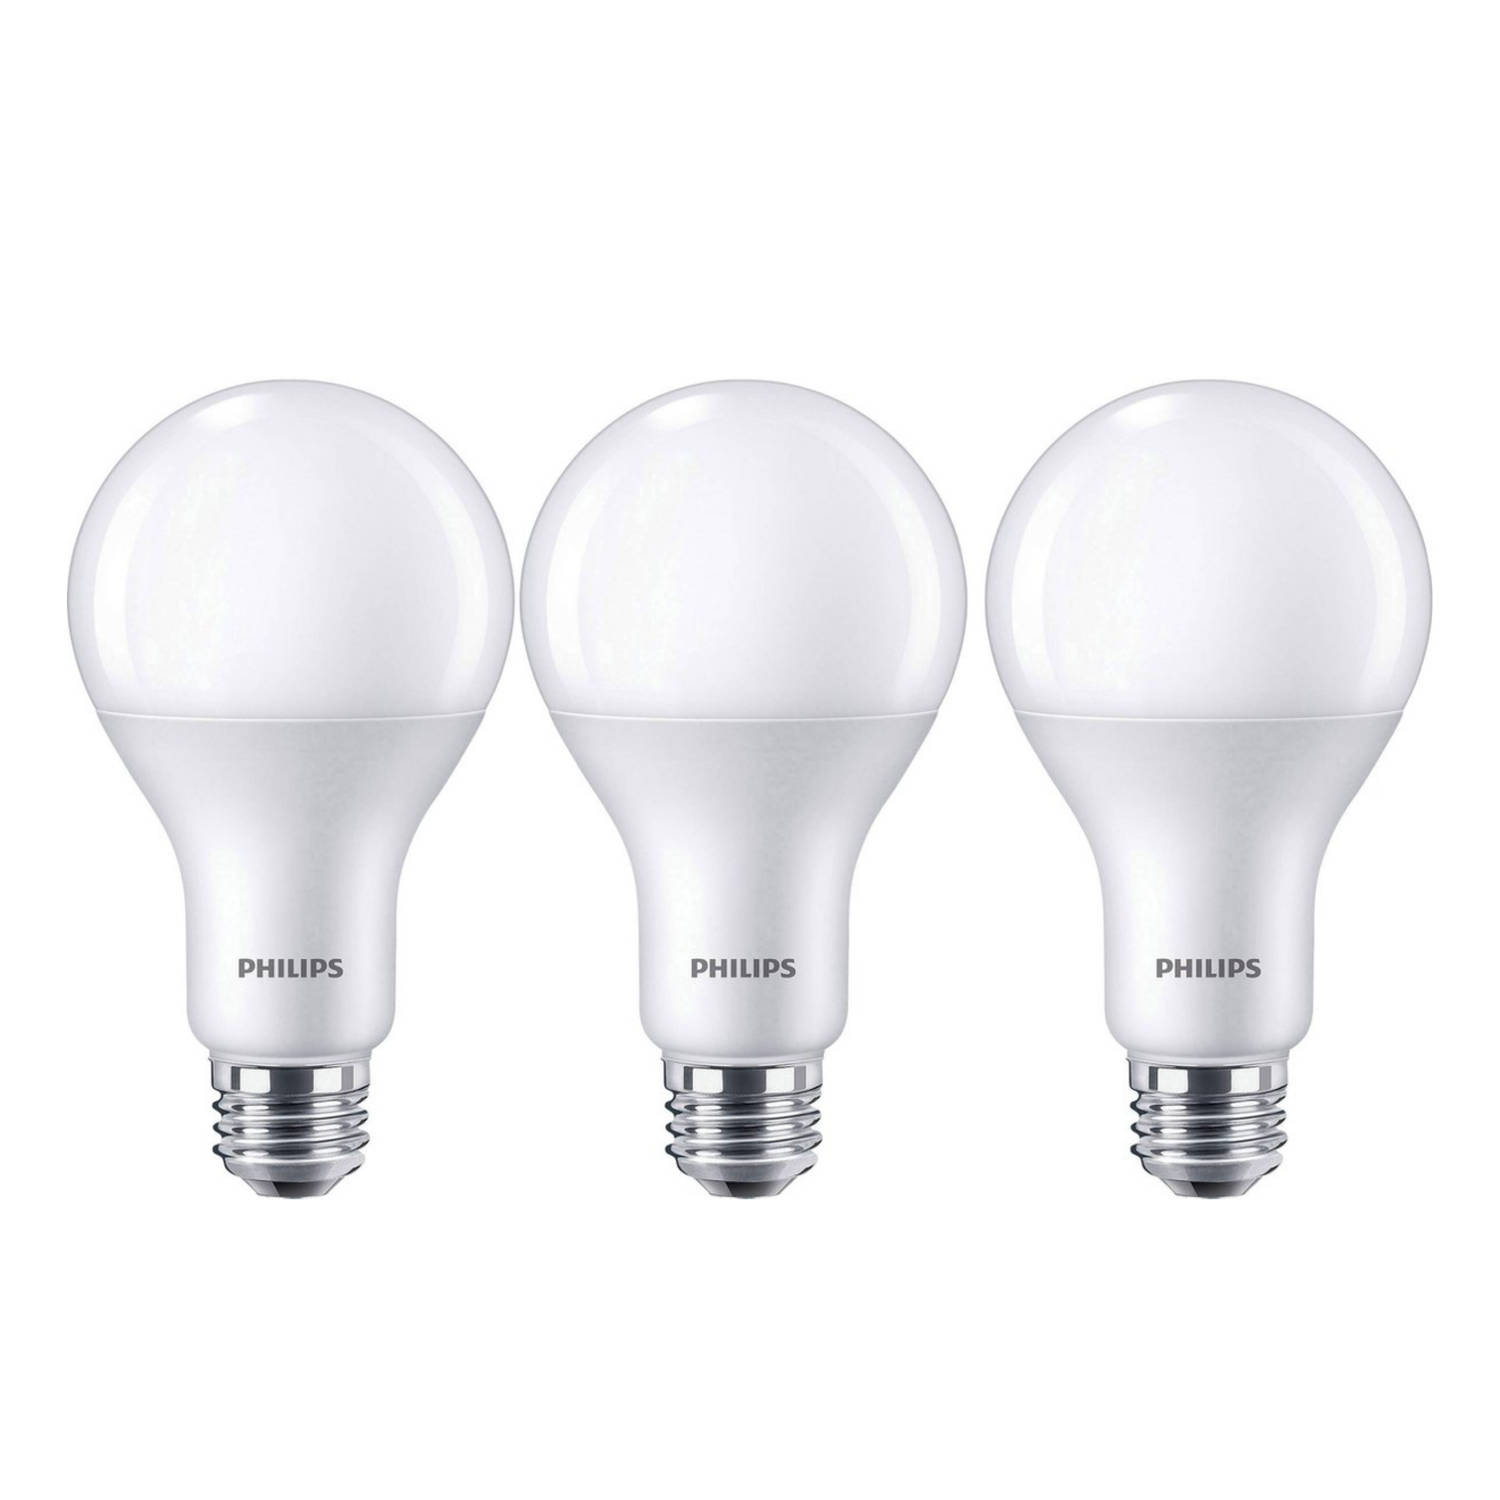 Philips Dimtone Led Lampen E27 - Dimbaar - 12w/75w - 1055 Lumen - Warm Wit Licht - 3 X Led Lamp